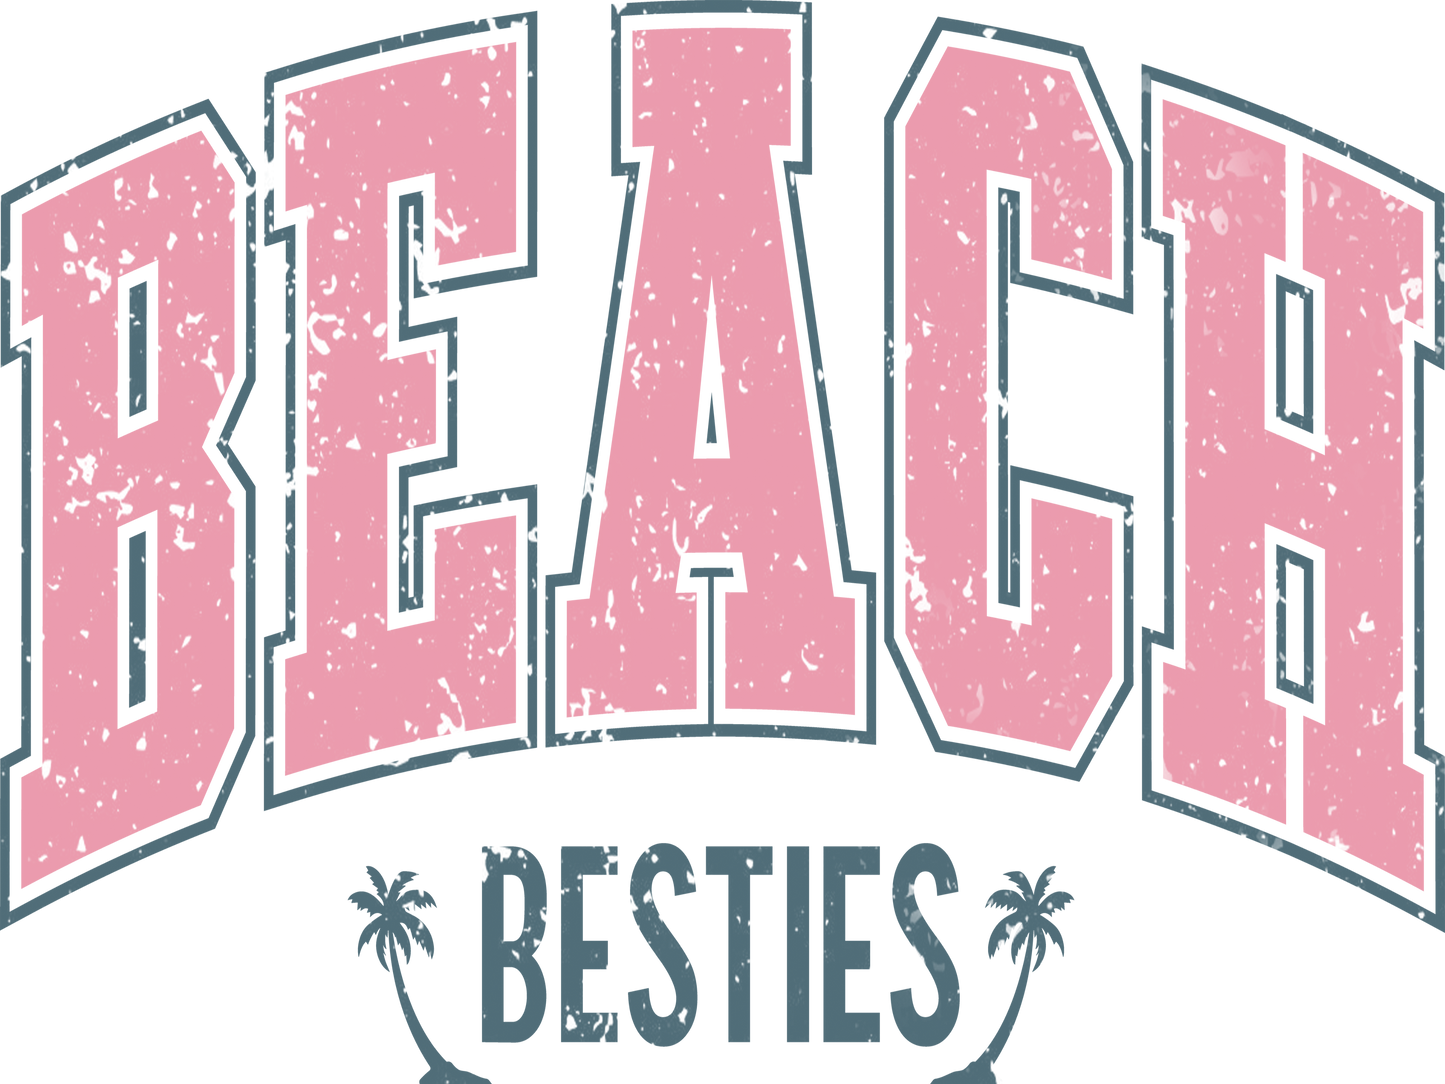 "Beach Besties Retro Vintage" Transfer